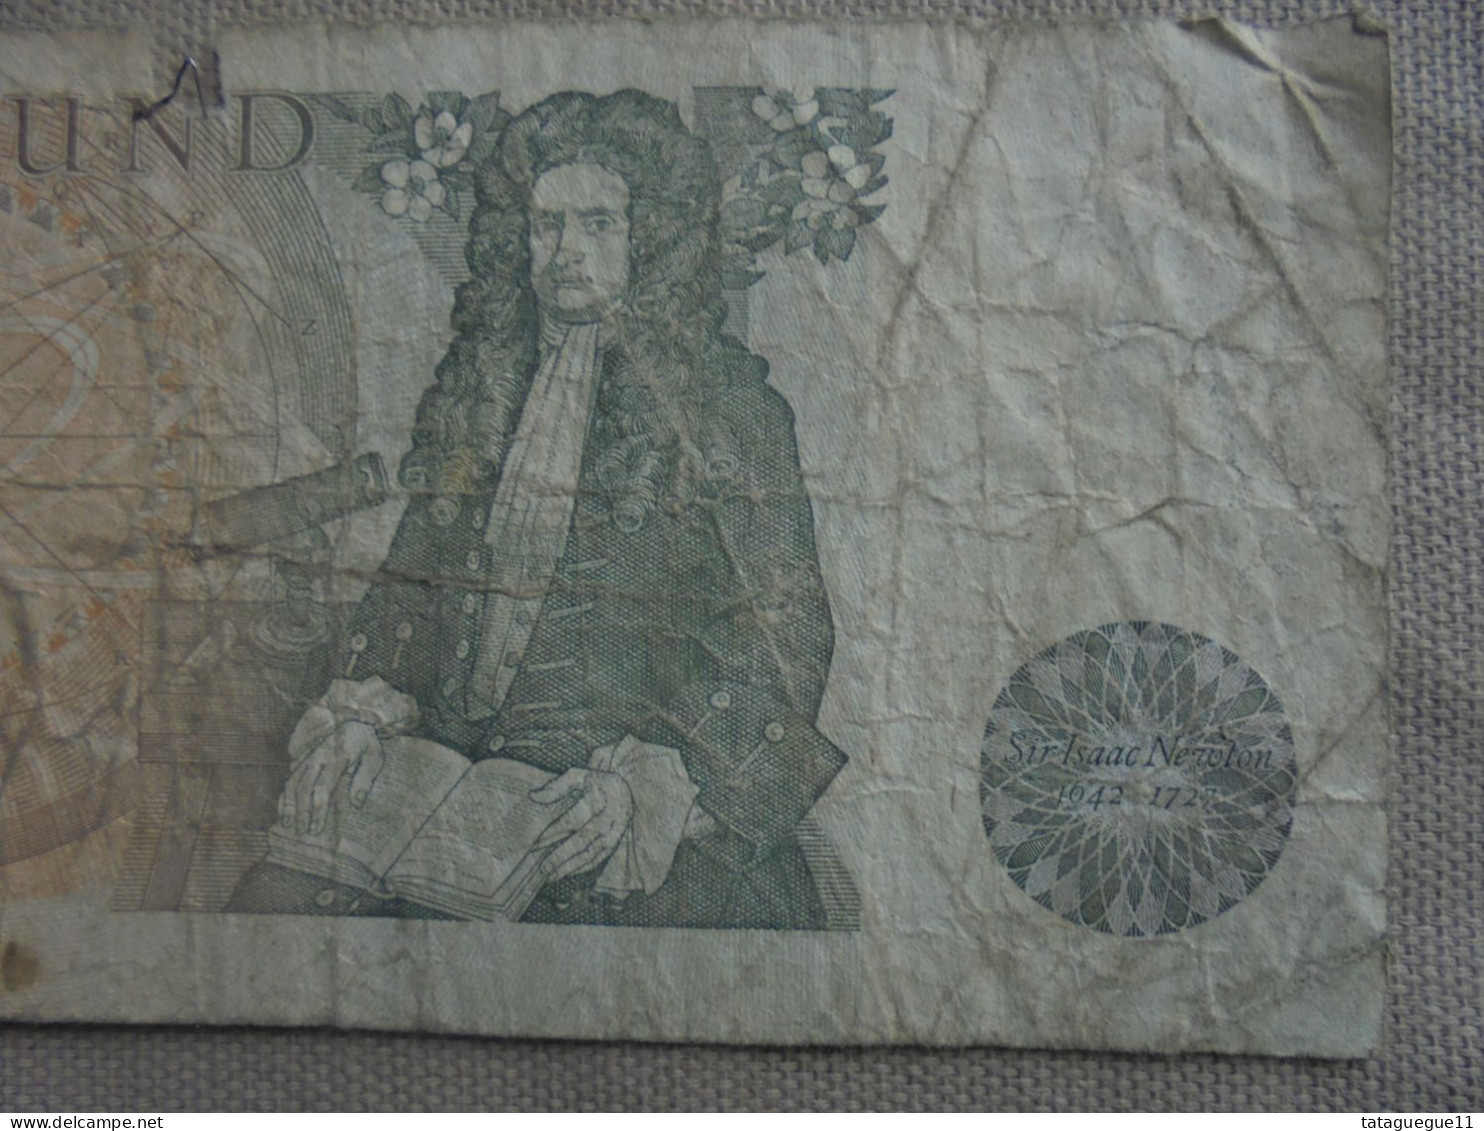 Ancien - Billet de banque - One Pound Bank of England - J.B Page